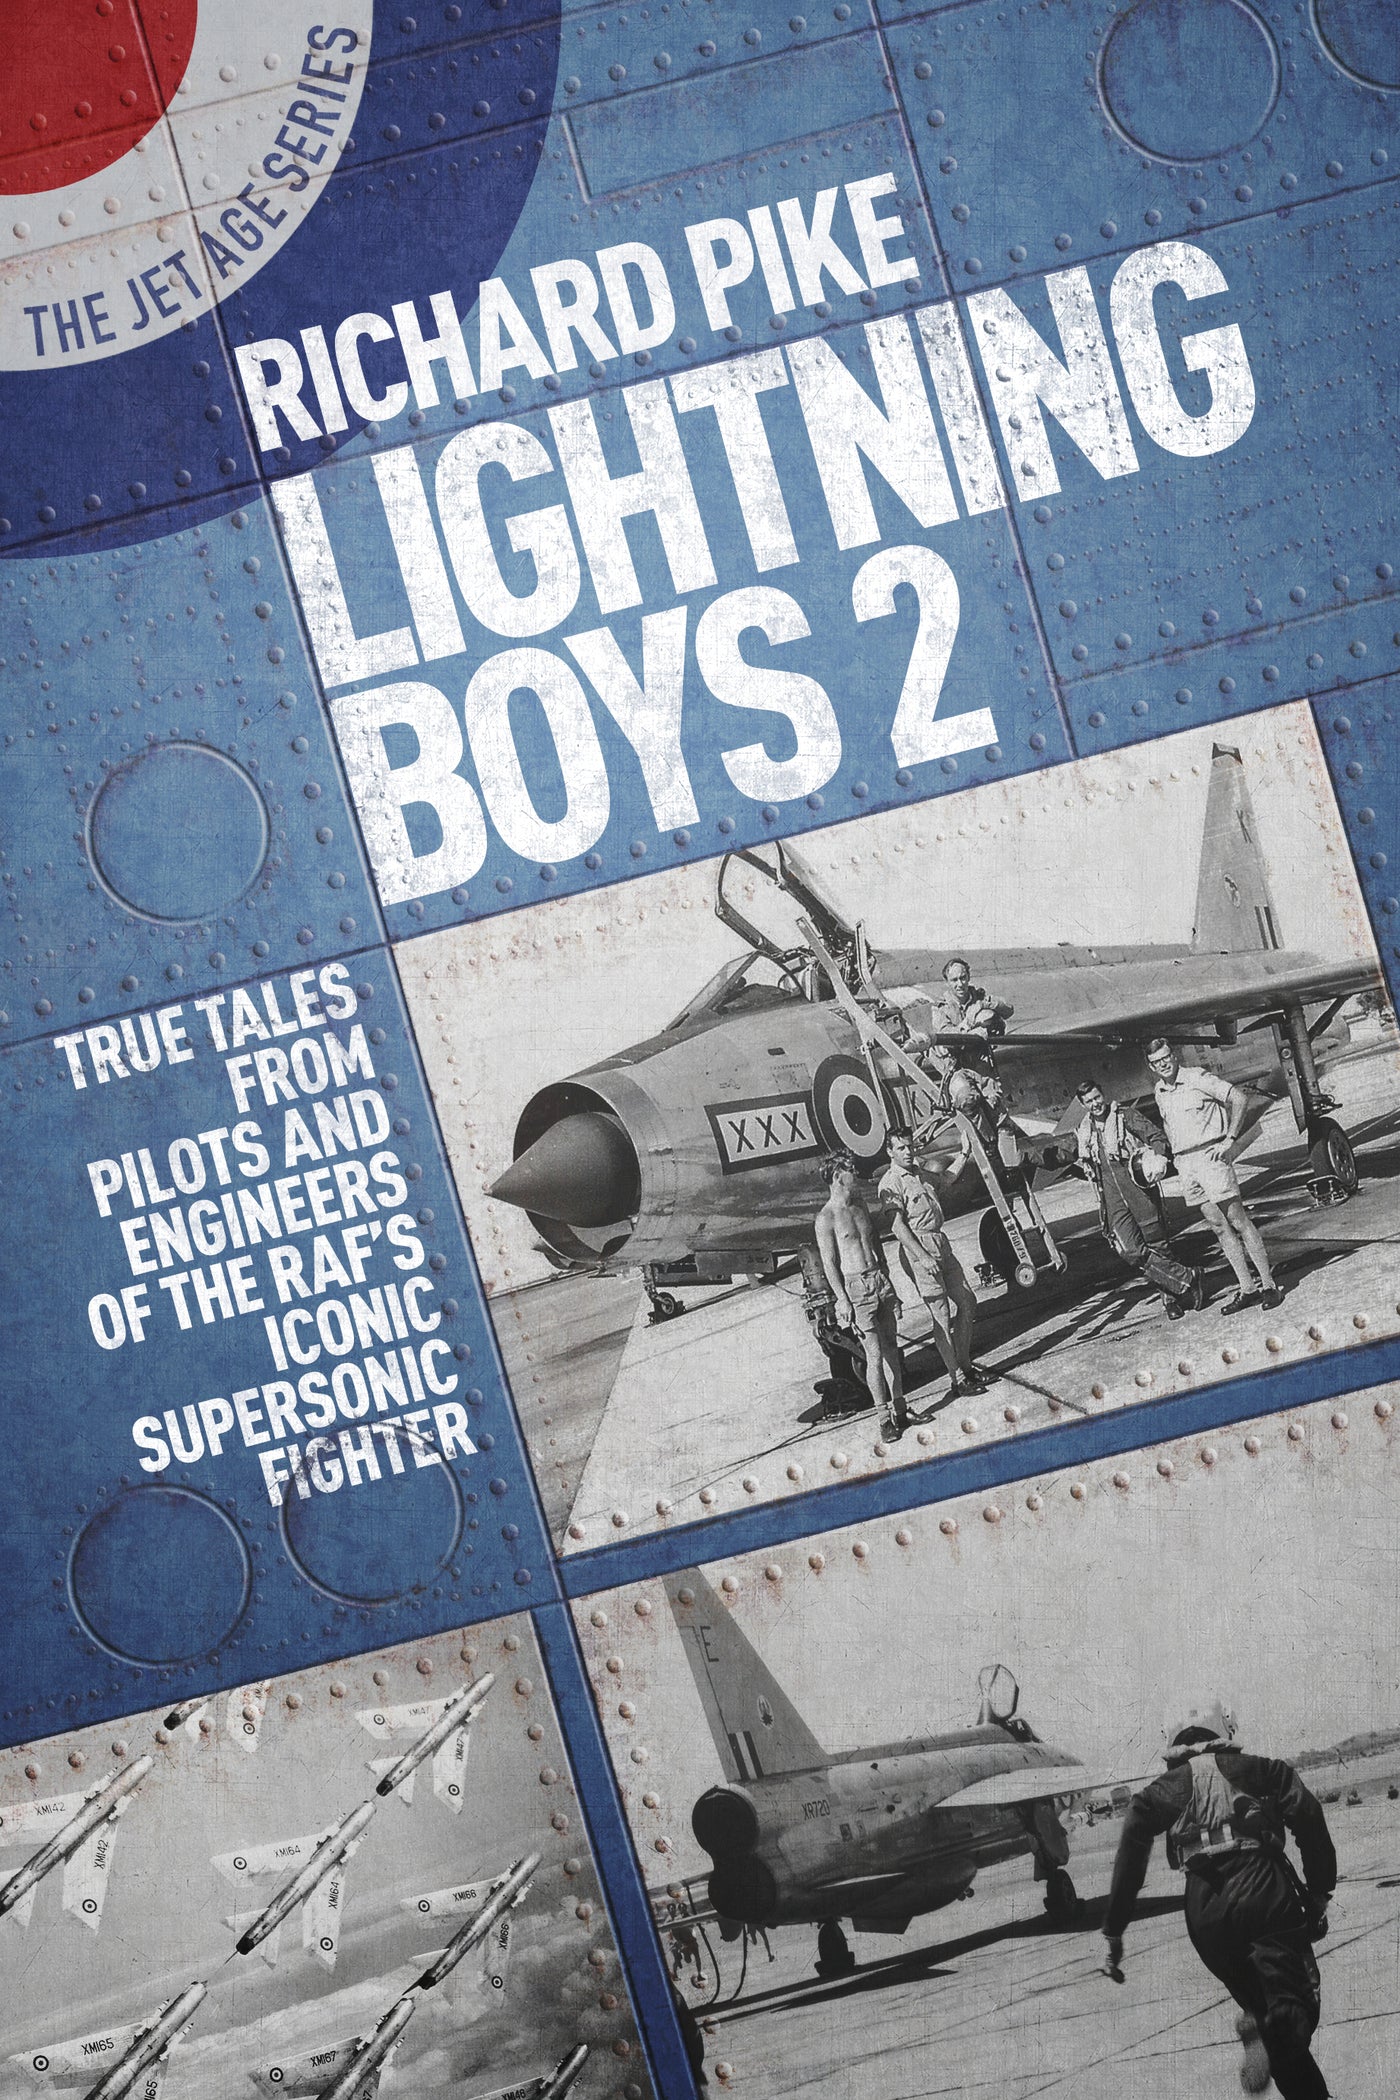 Die Lightning Boys 2 